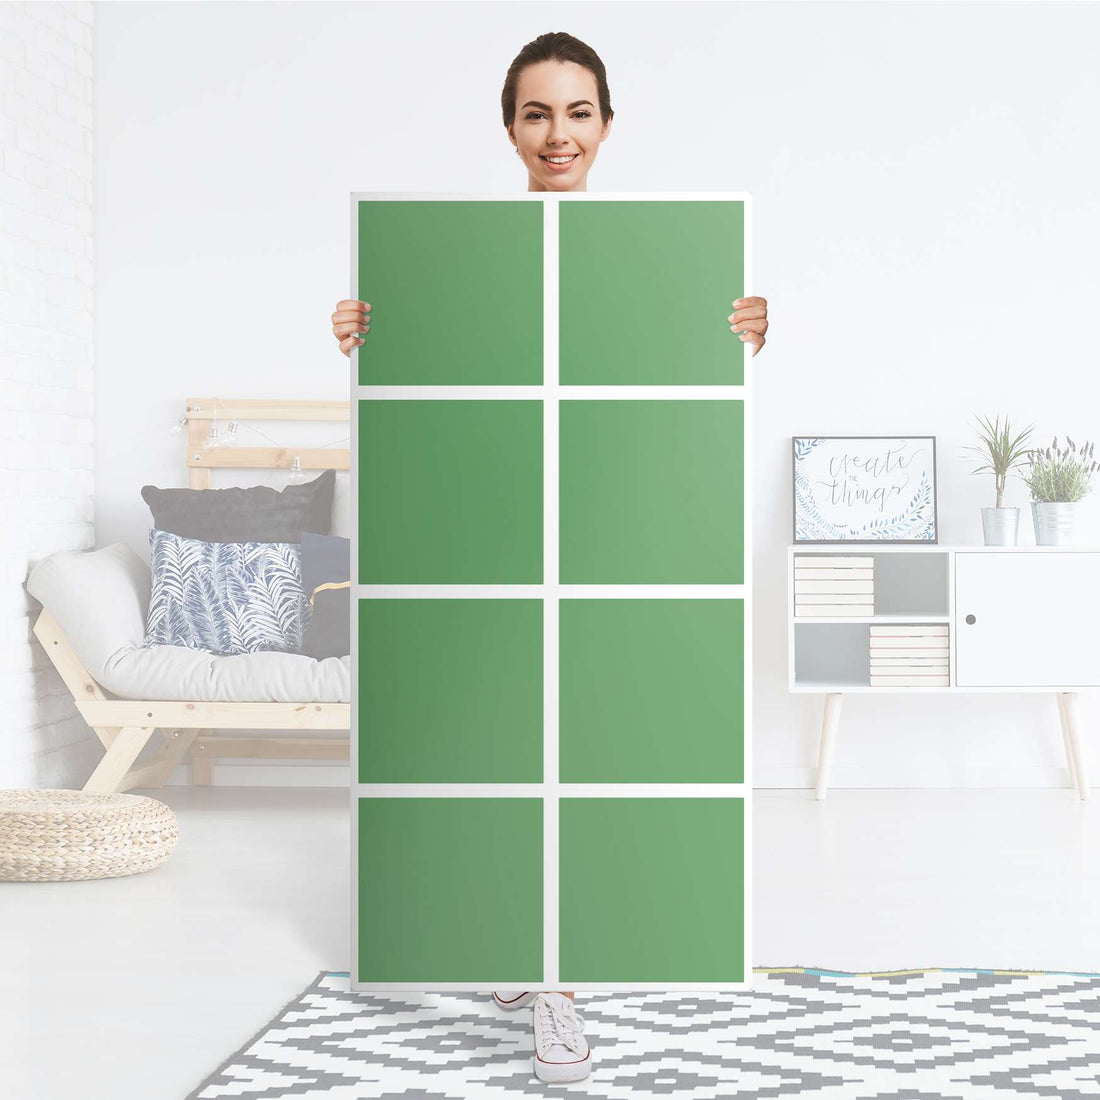 Folie für Möbel Grün Light - IKEA Kallax Regal 8 Türen - Folie